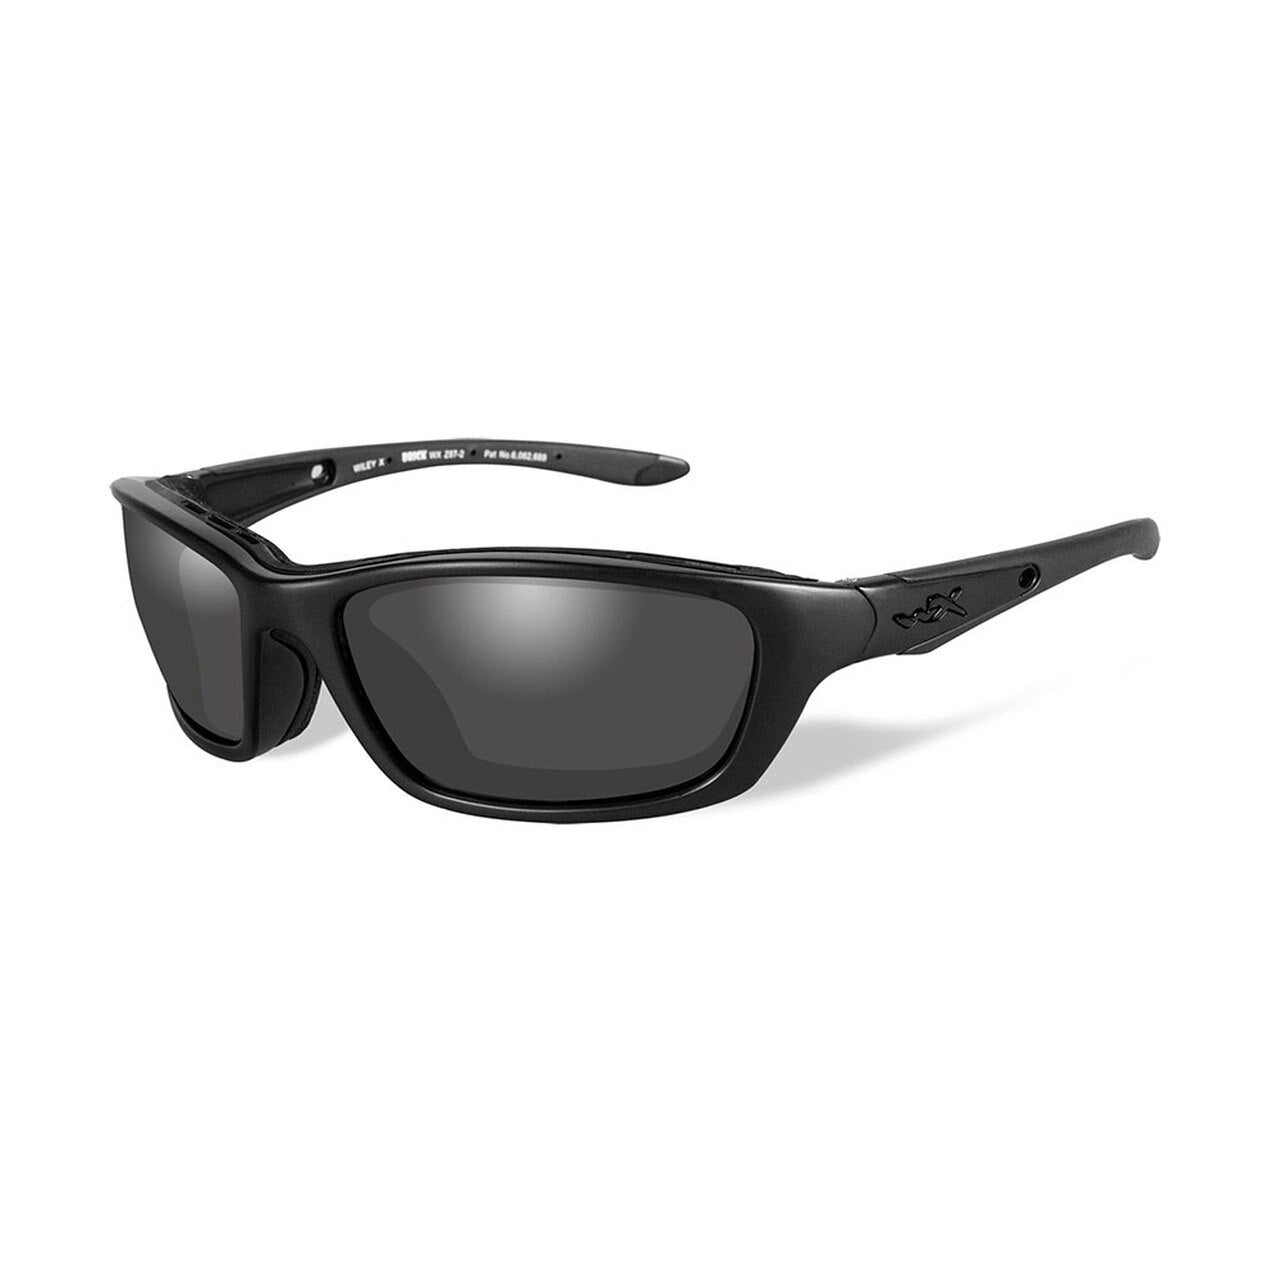 Wiley X Brick Sunglasses Smoke Grey Lens Matte Black Frame Eyewear Wiley X Tactical Gear Supplier Tactical Distributors Australia